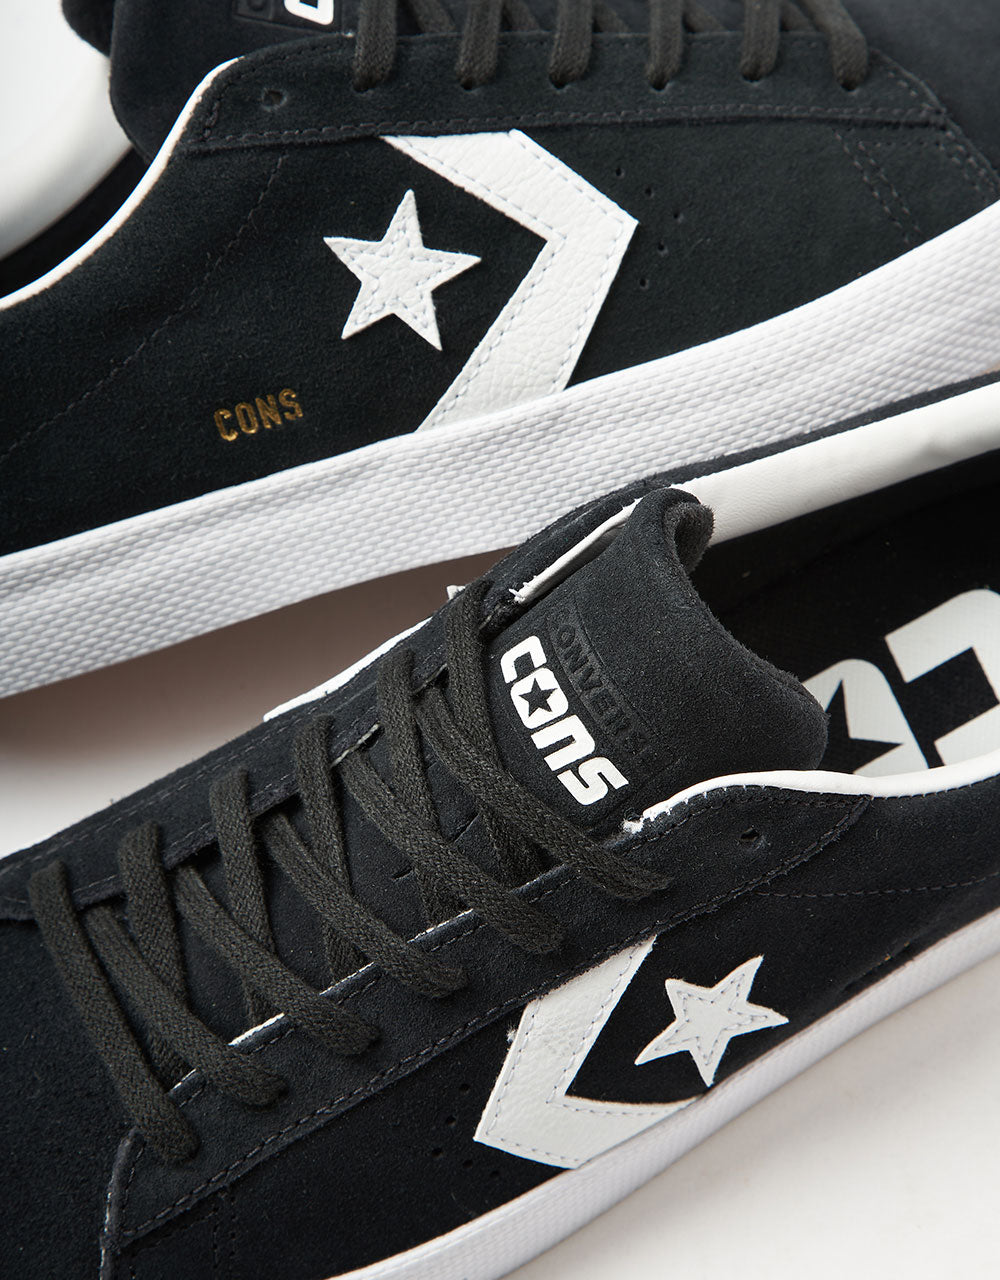 Converse Pro Leather Vulc Skate Shoes - Black/White/White